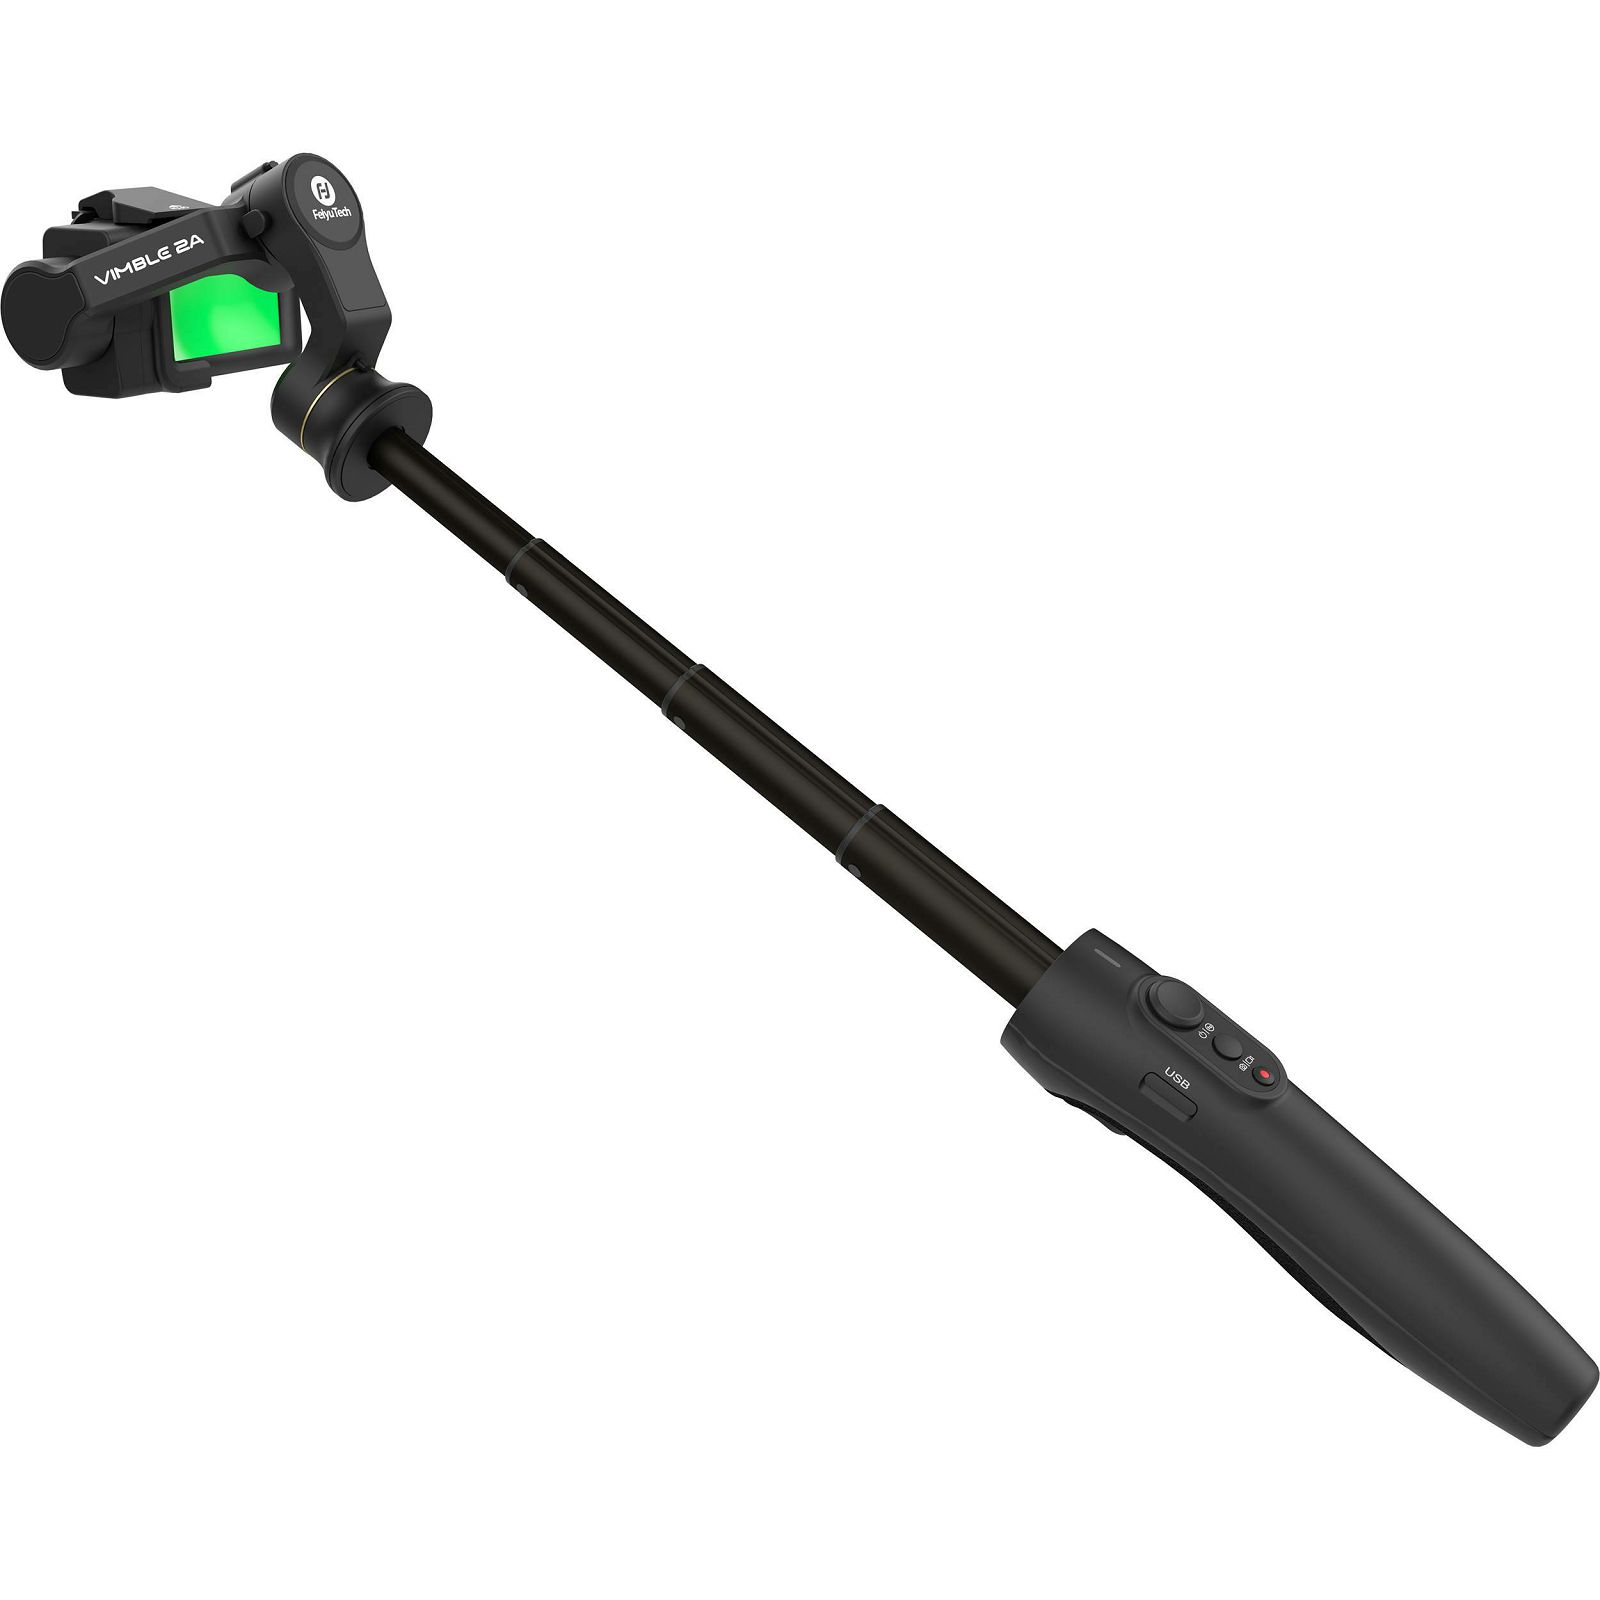 FeiyuTech Vimble 2A Gimbal Stabilizer 3-osni stabilizator za GoPro 5/6/7